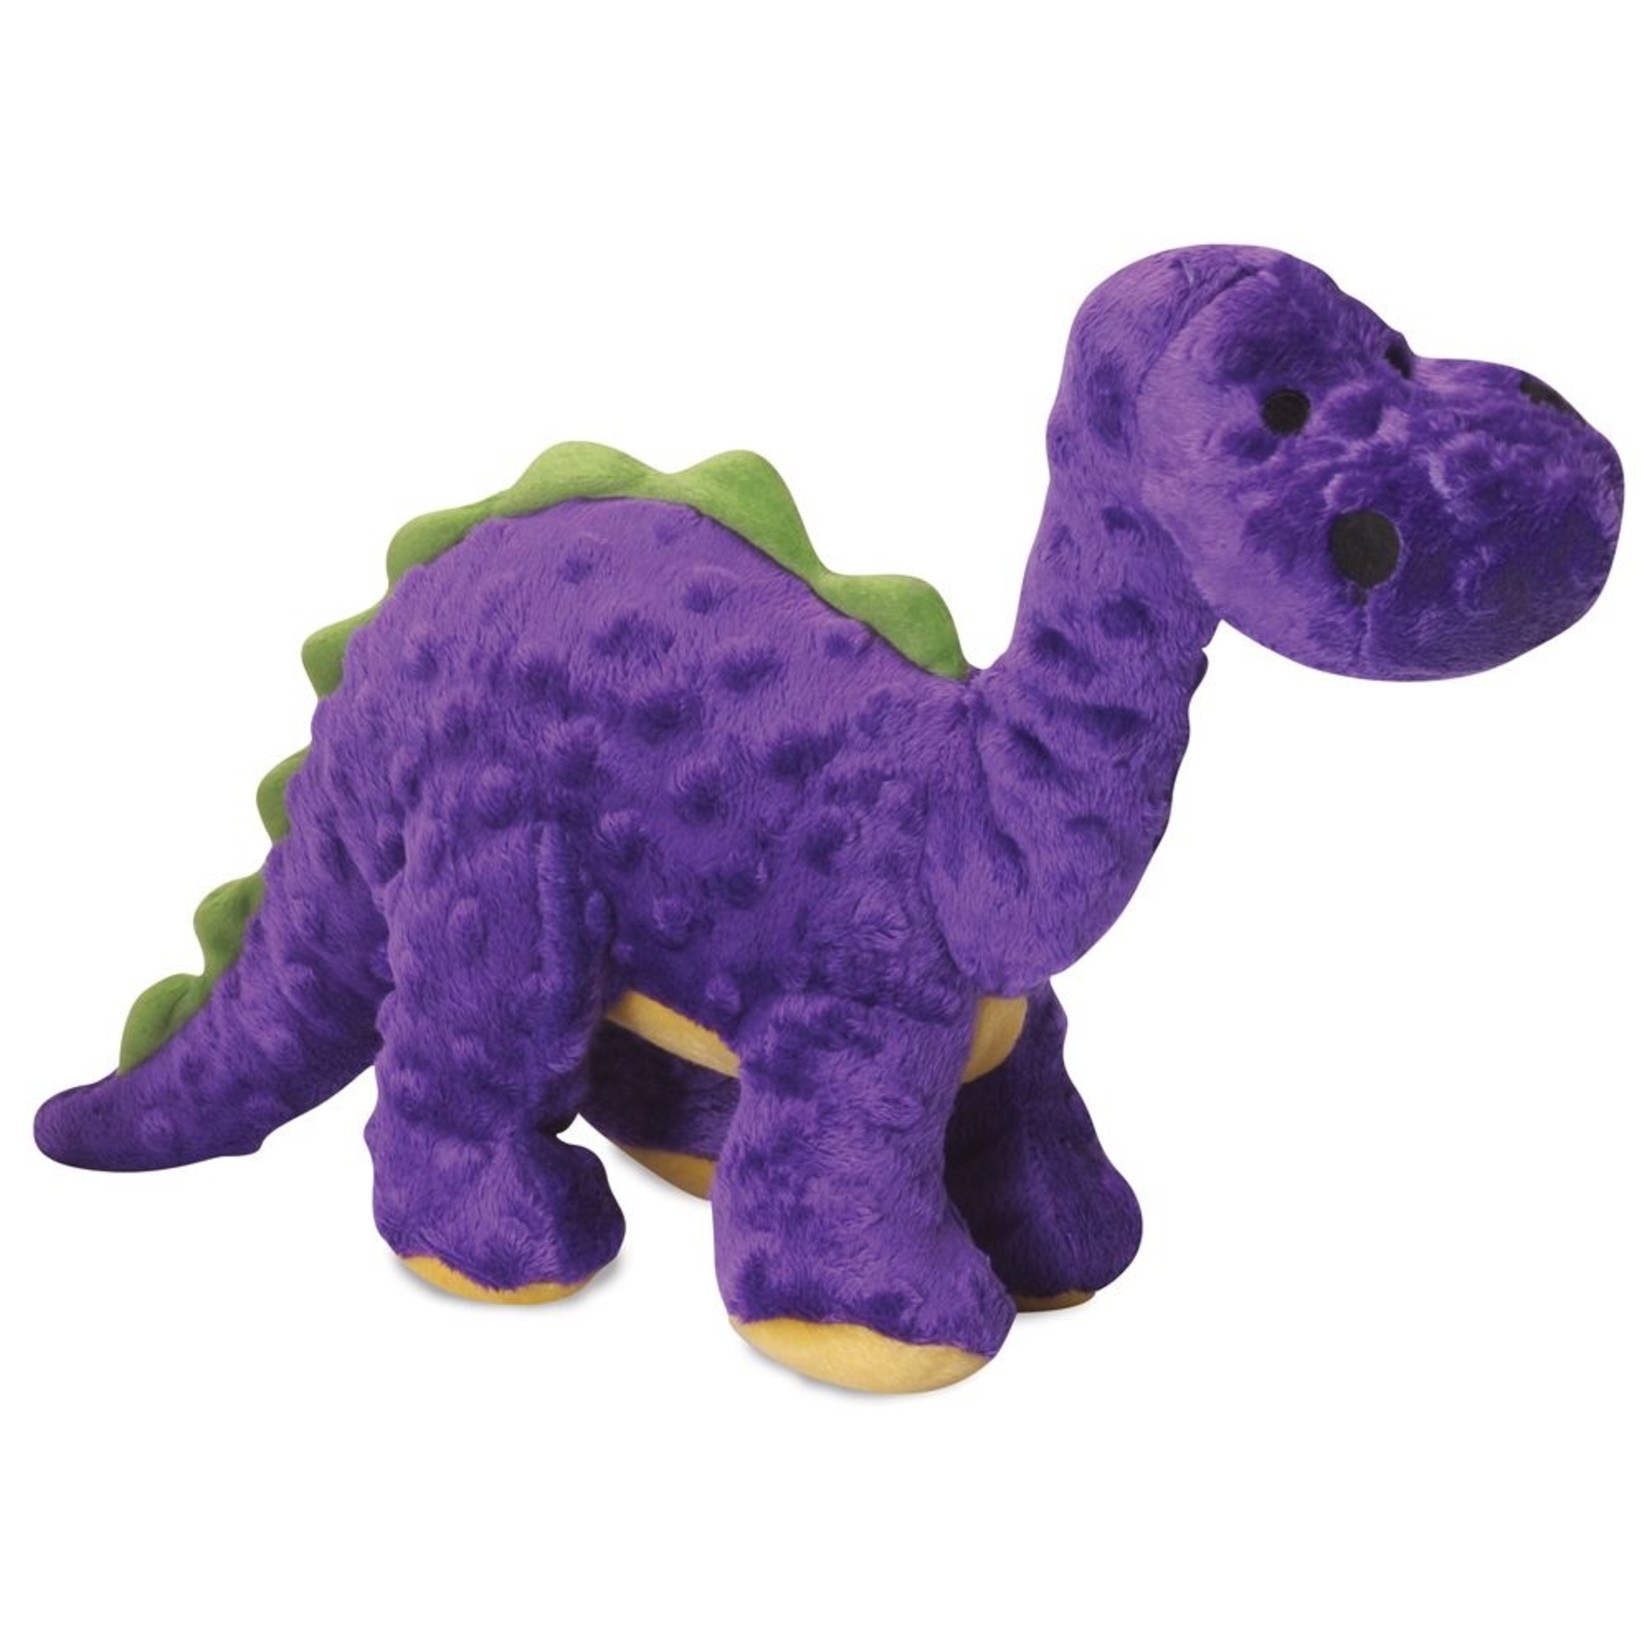 Go Dog Go Dog Plush Brontosaurus purple